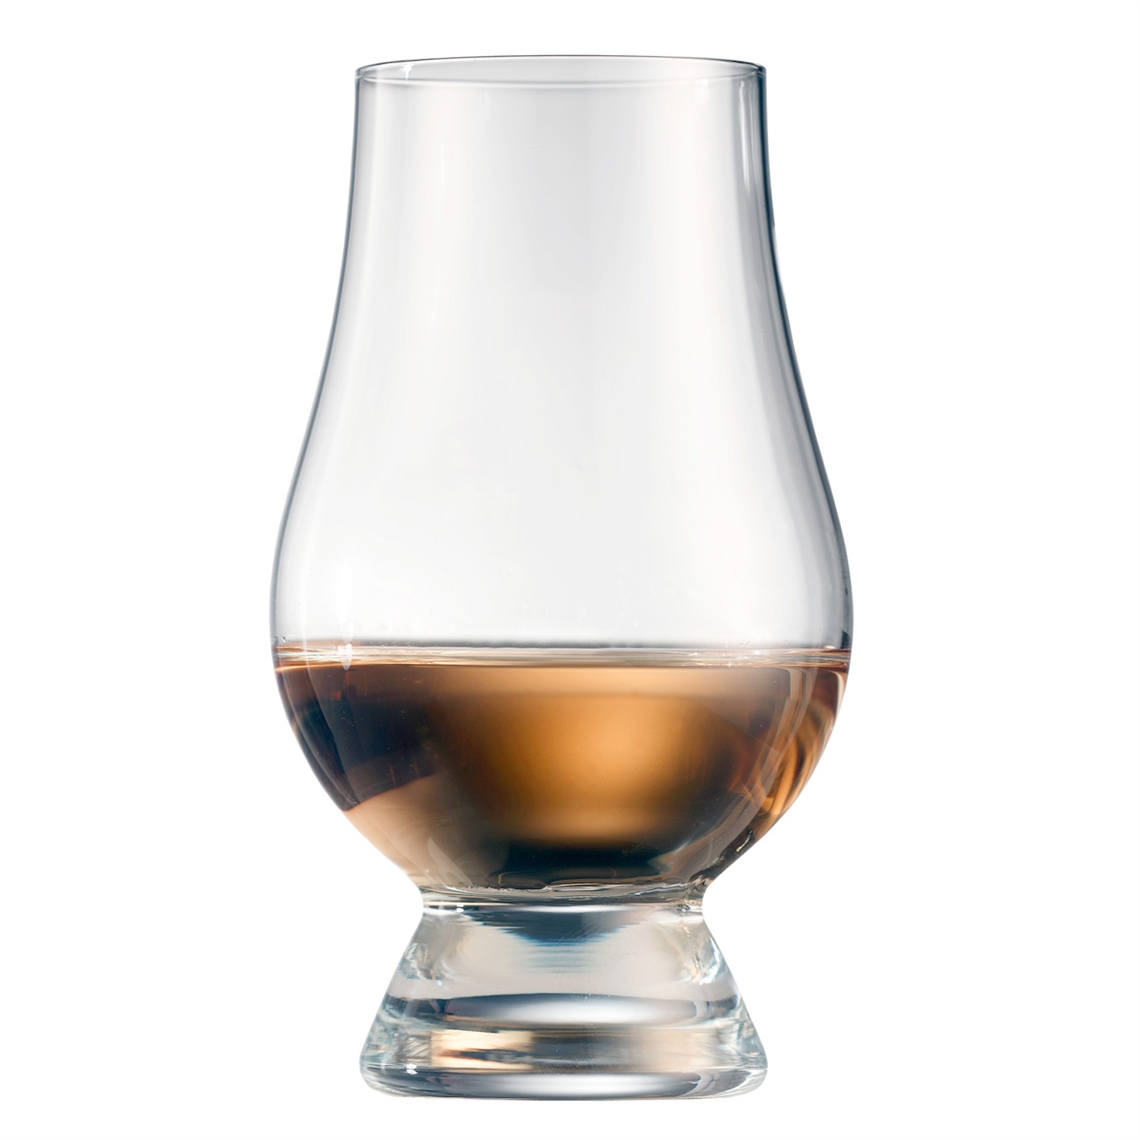 View more glencairn from our Whisky Glasses range